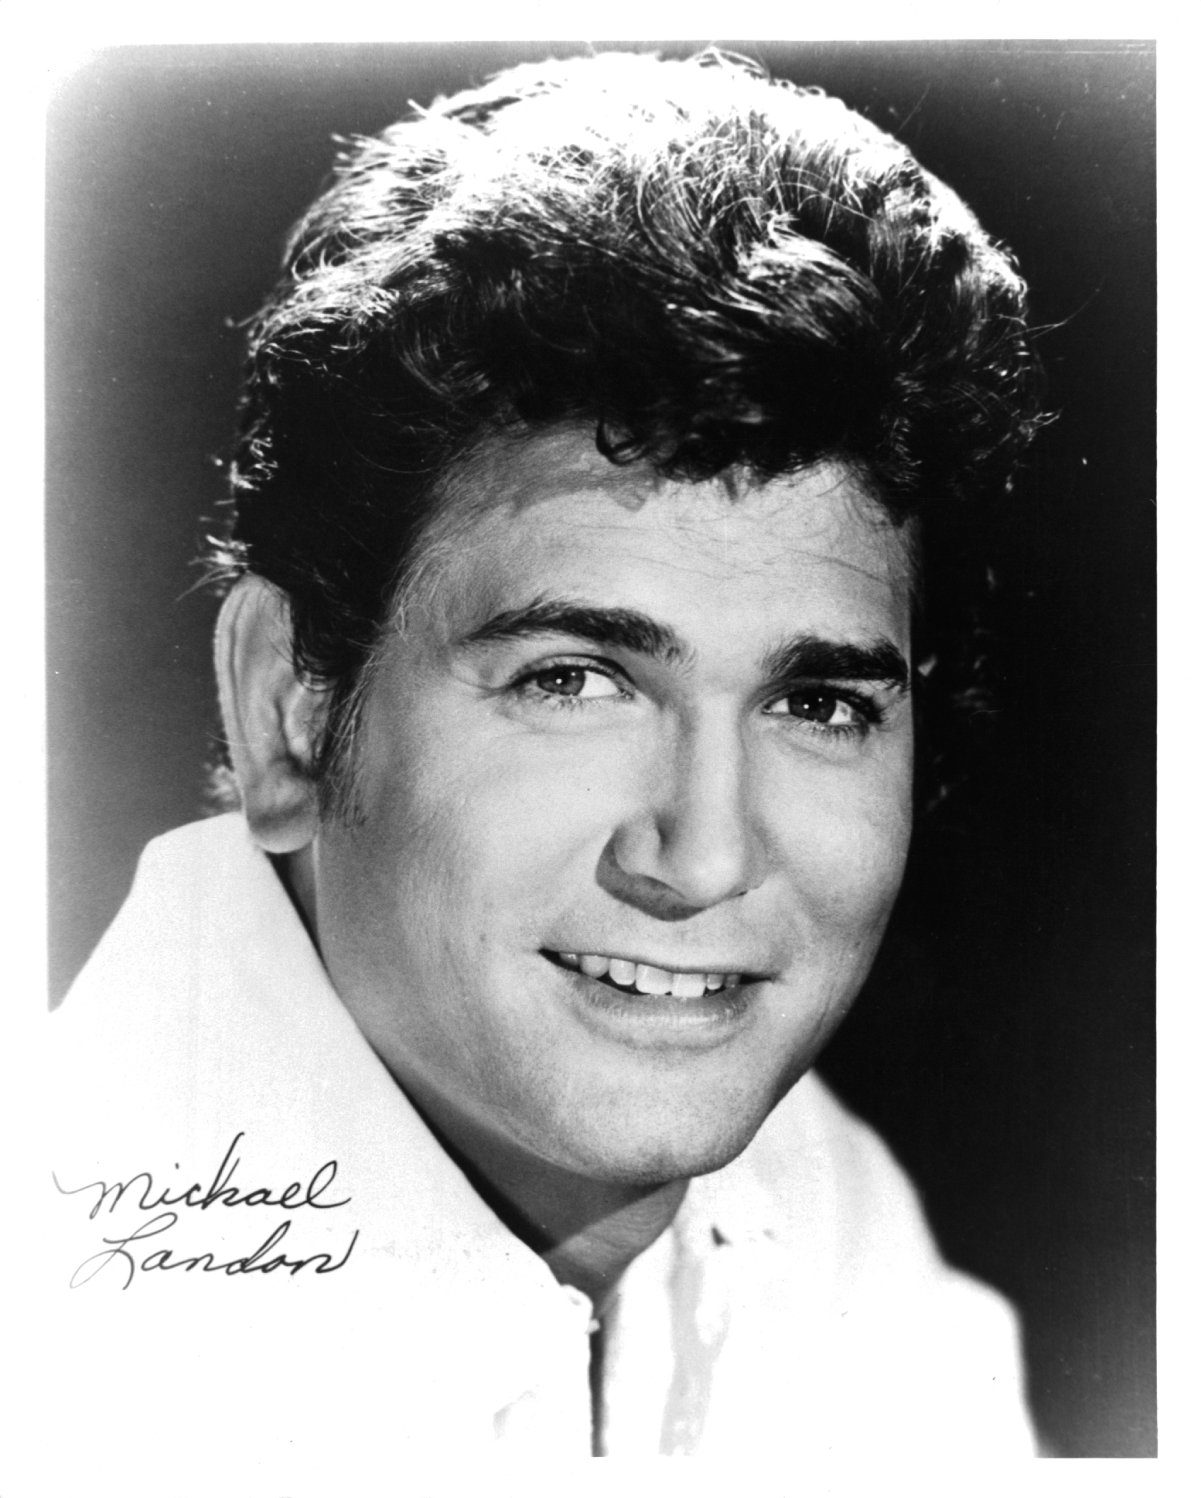 Michael Landon in 1965